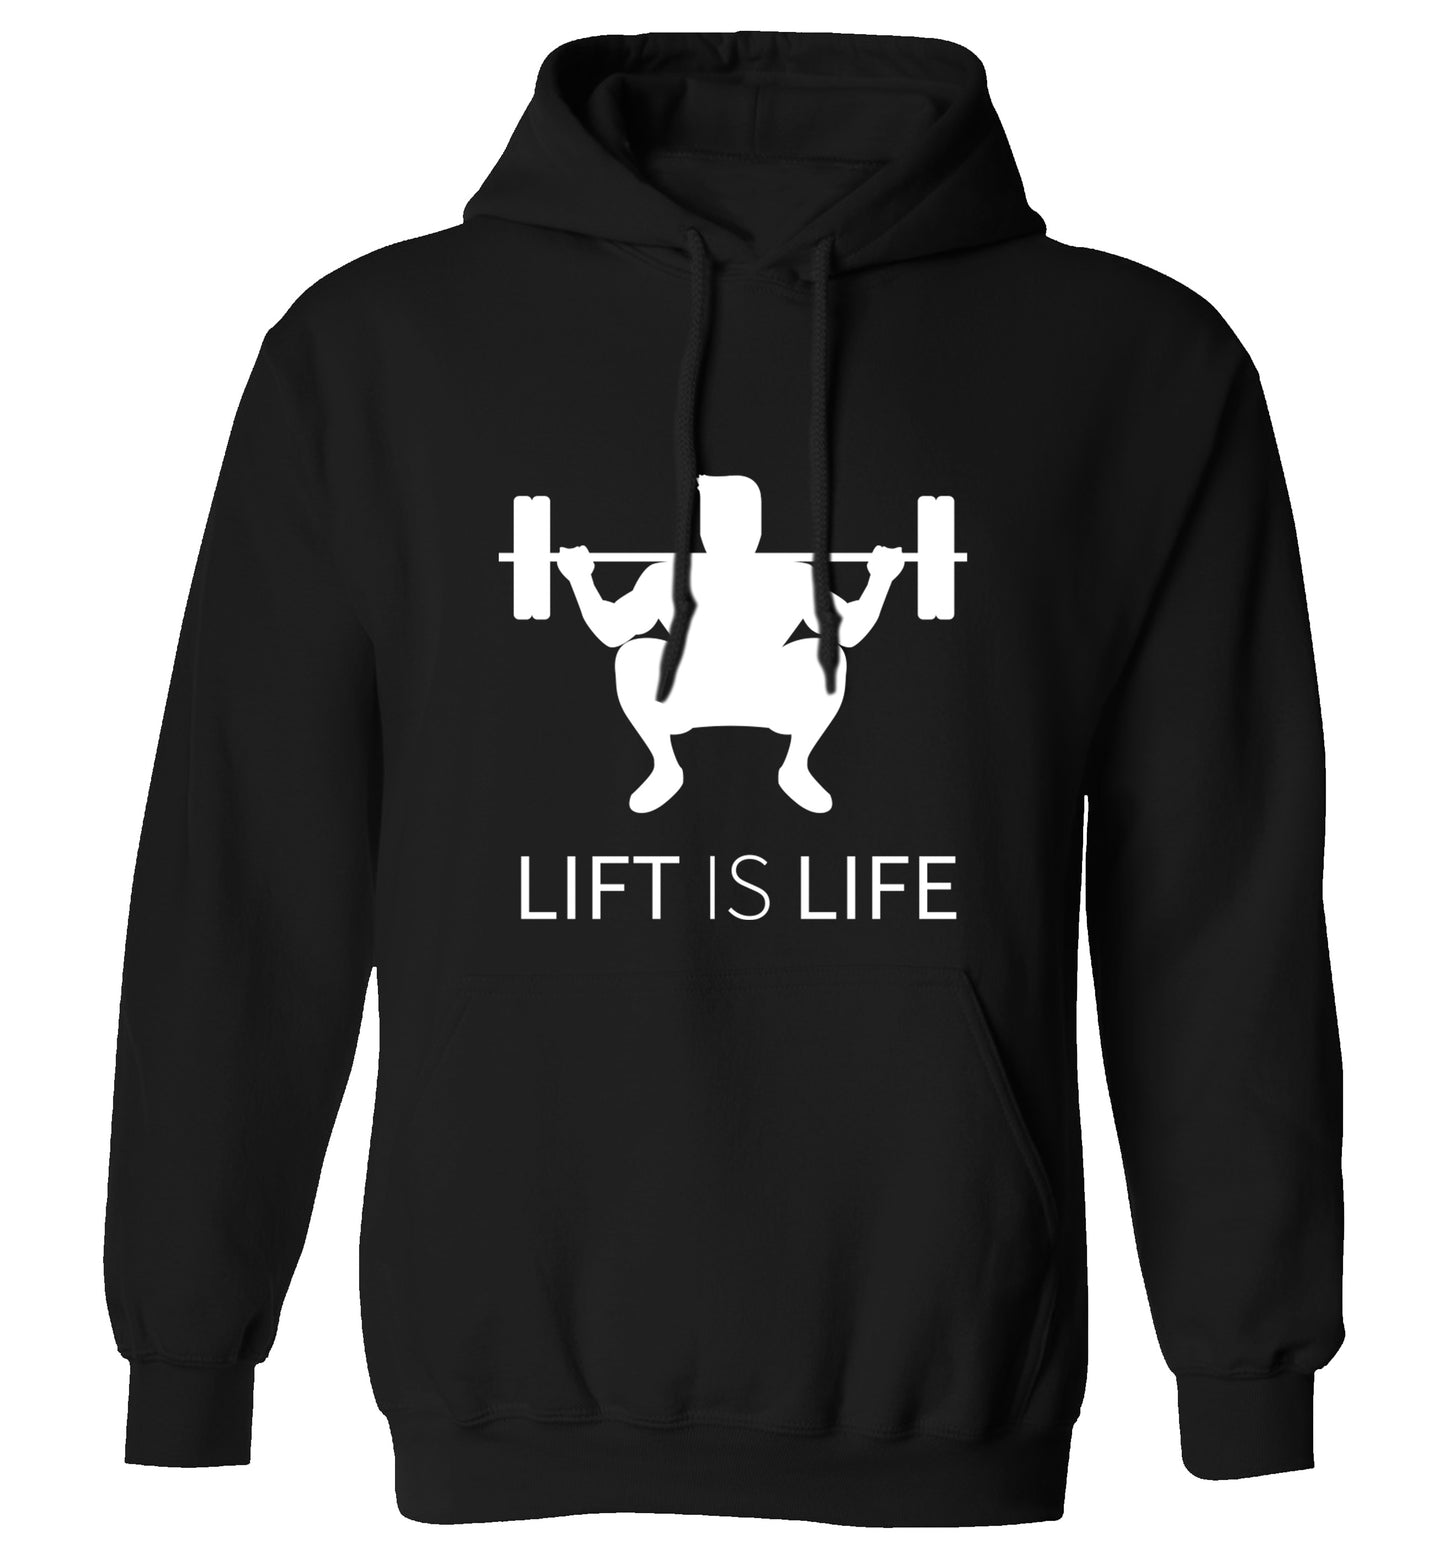 Lift is life adults unisex black hoodie 2XL